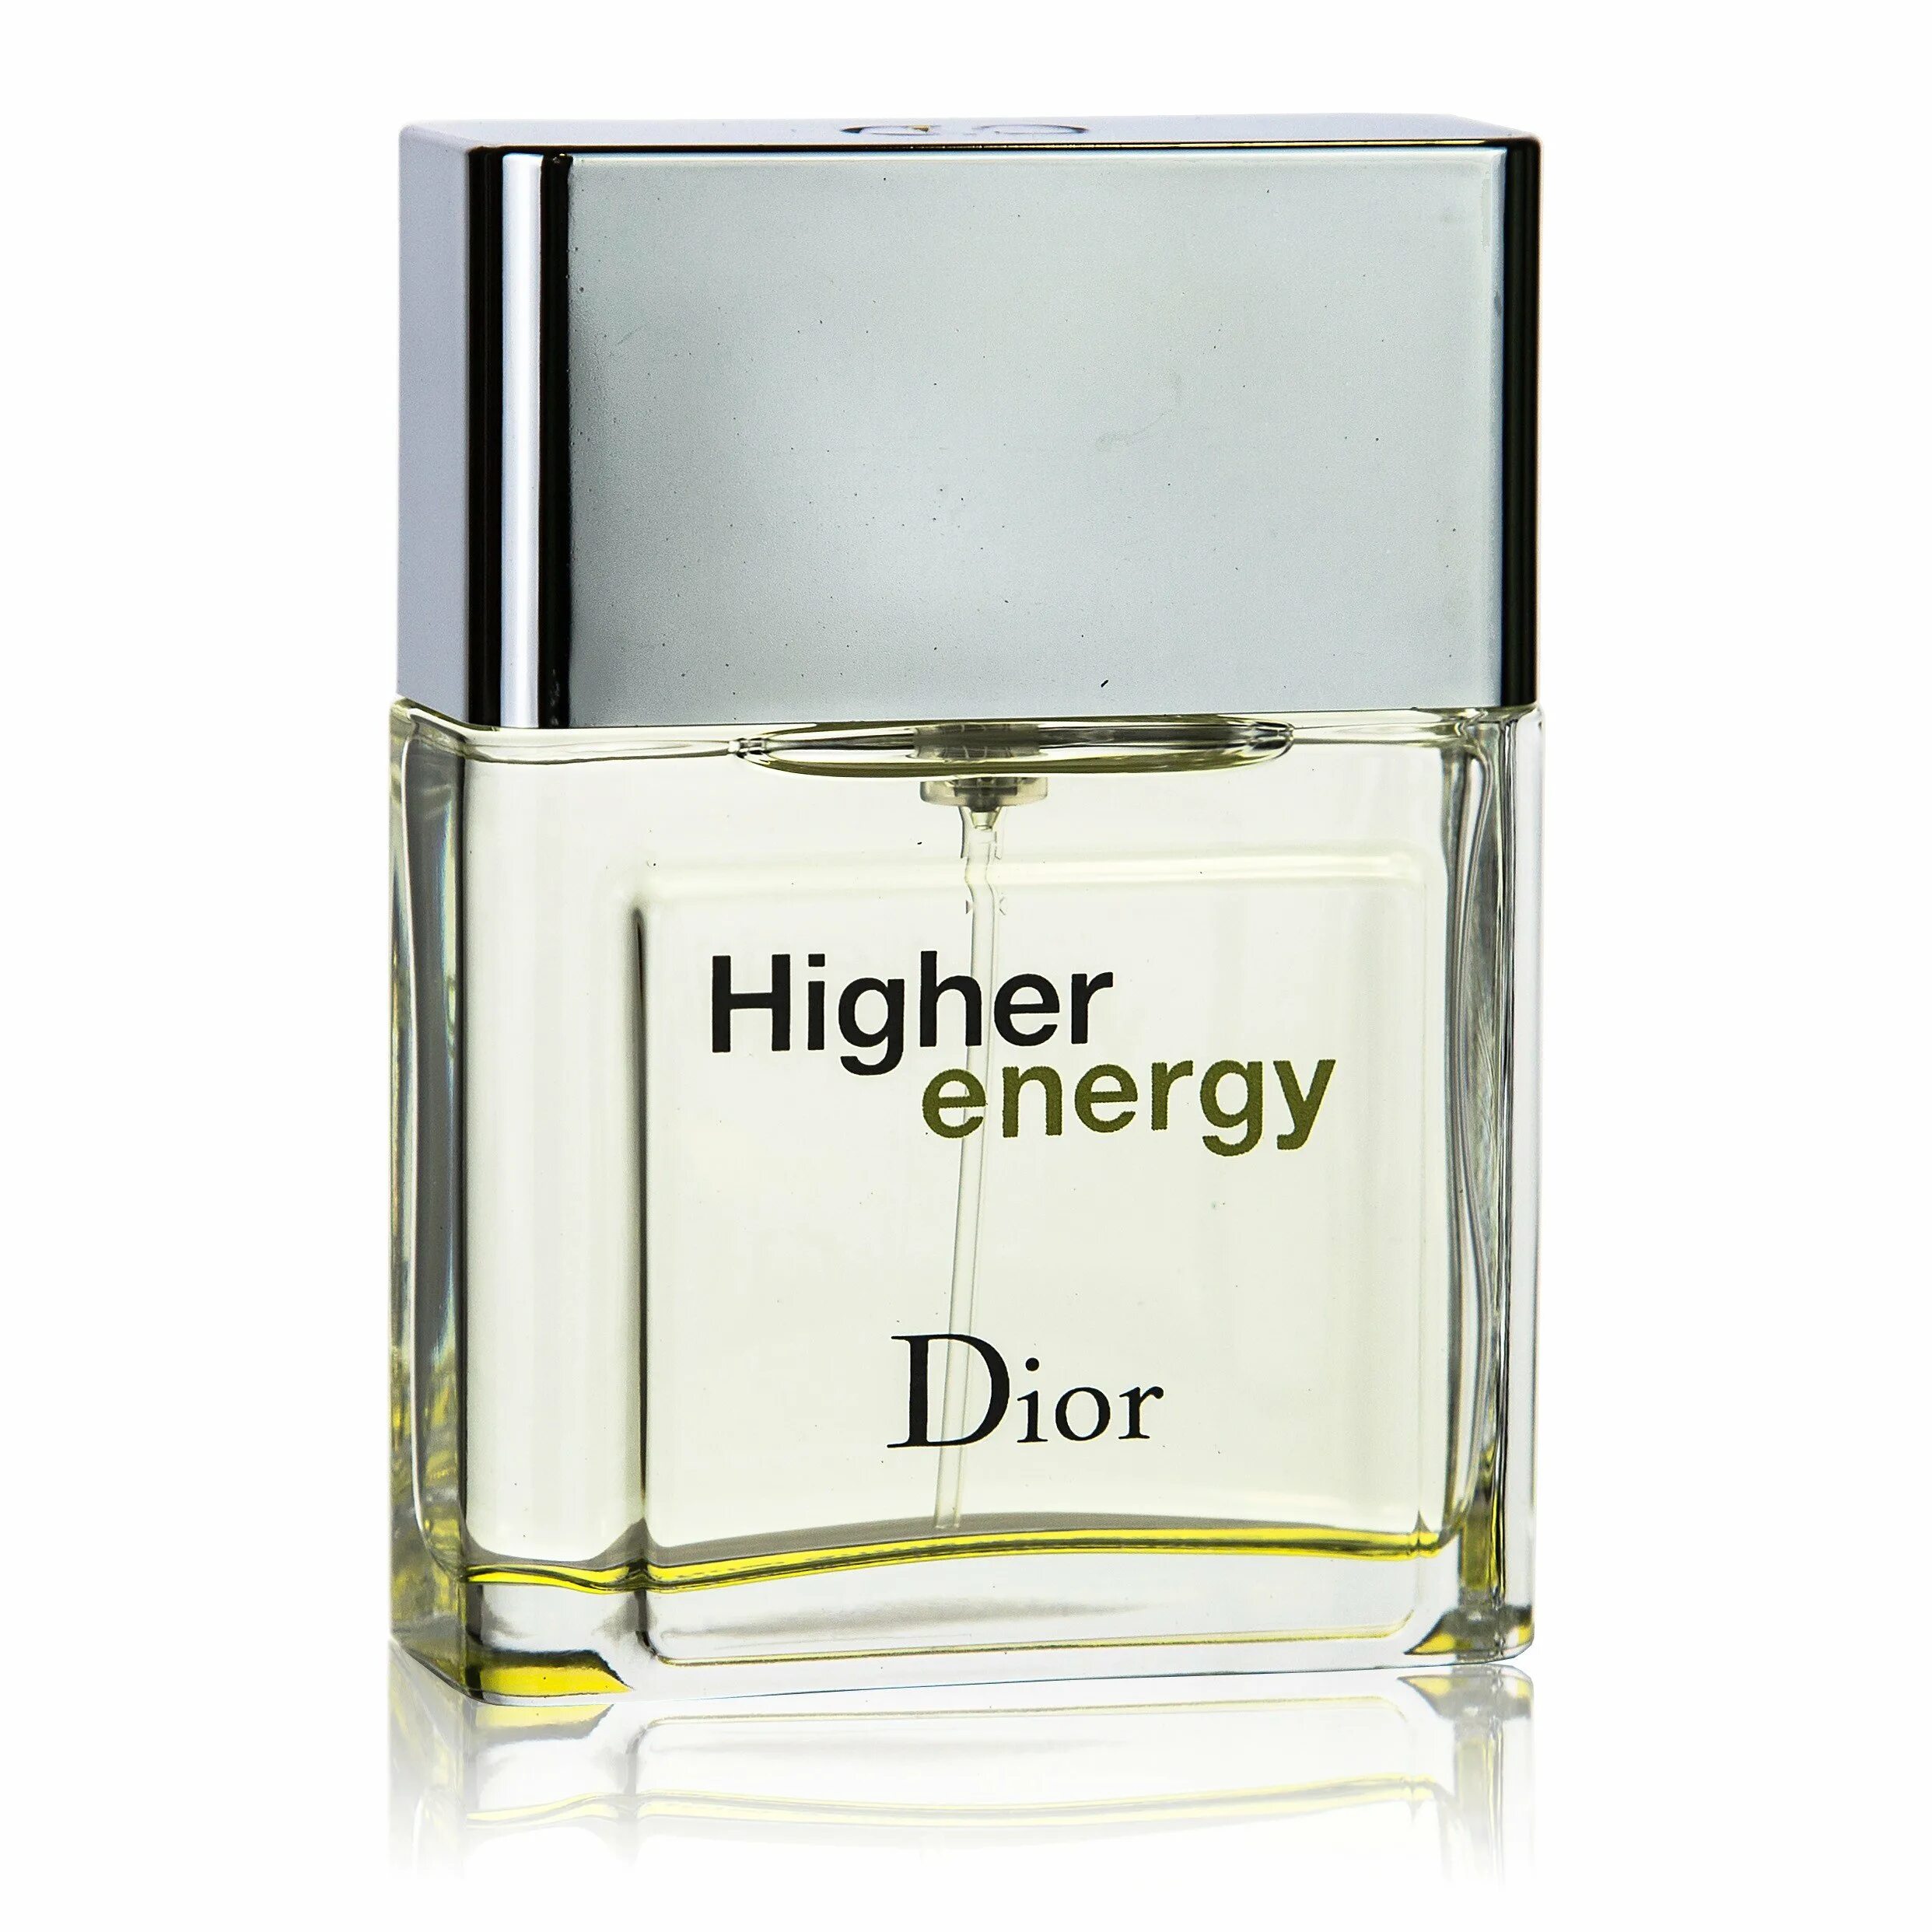 Higher Dior 50ml. Диор higher Energy. Christian Dior higher EDT (M) 50ml Tester. Духи диор Энерджи.